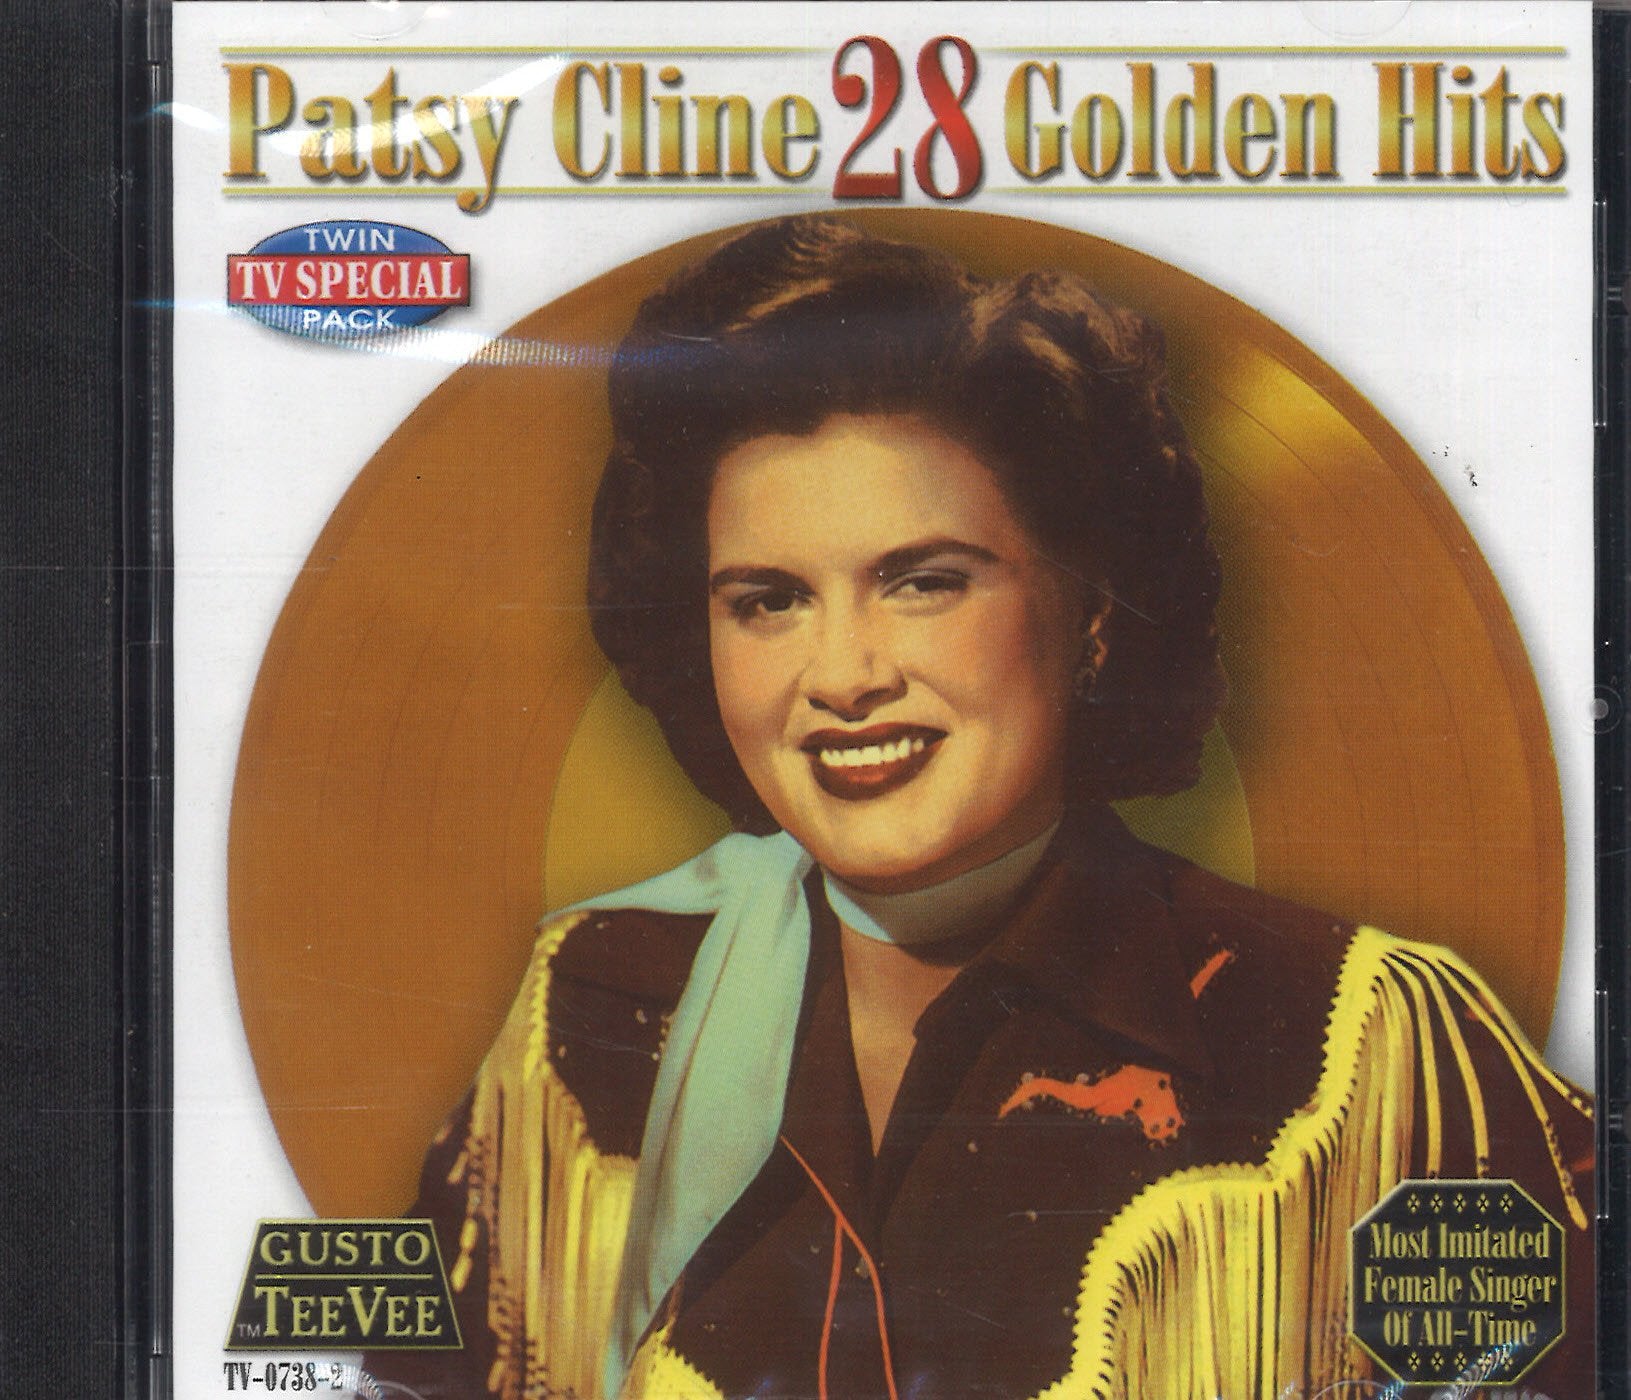 Patsy Cline 28 Golden Hits